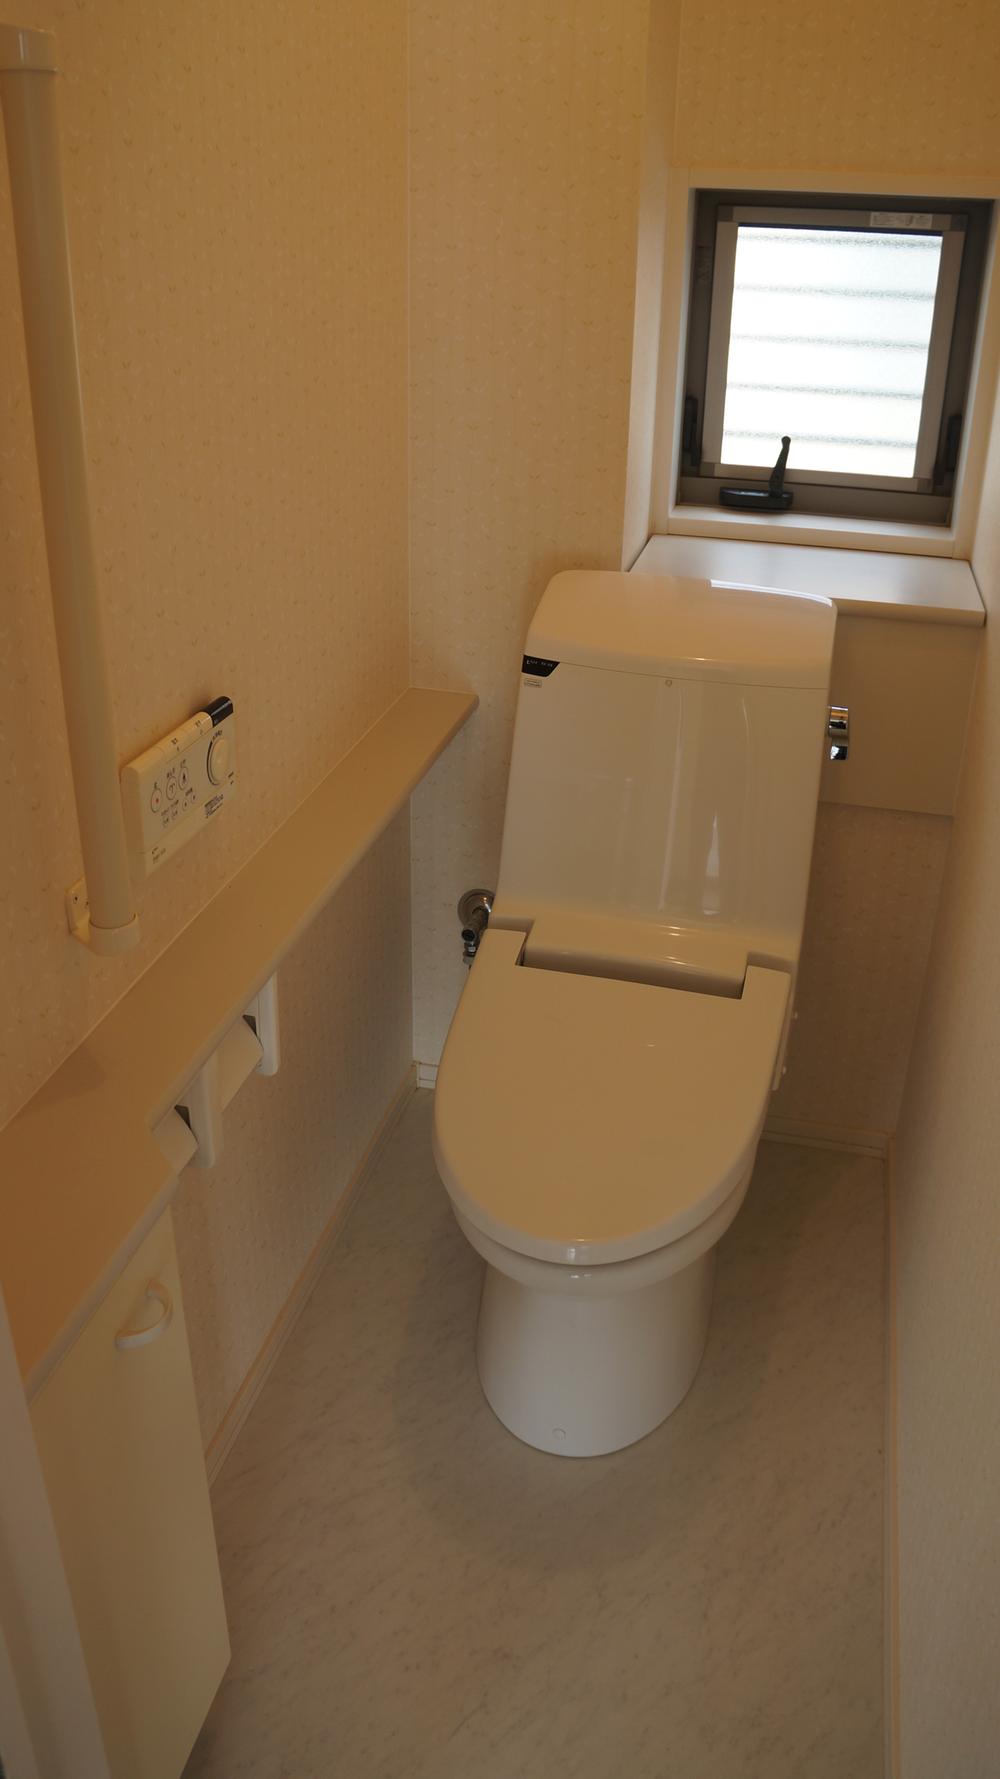 Toilet. First floor system toilet